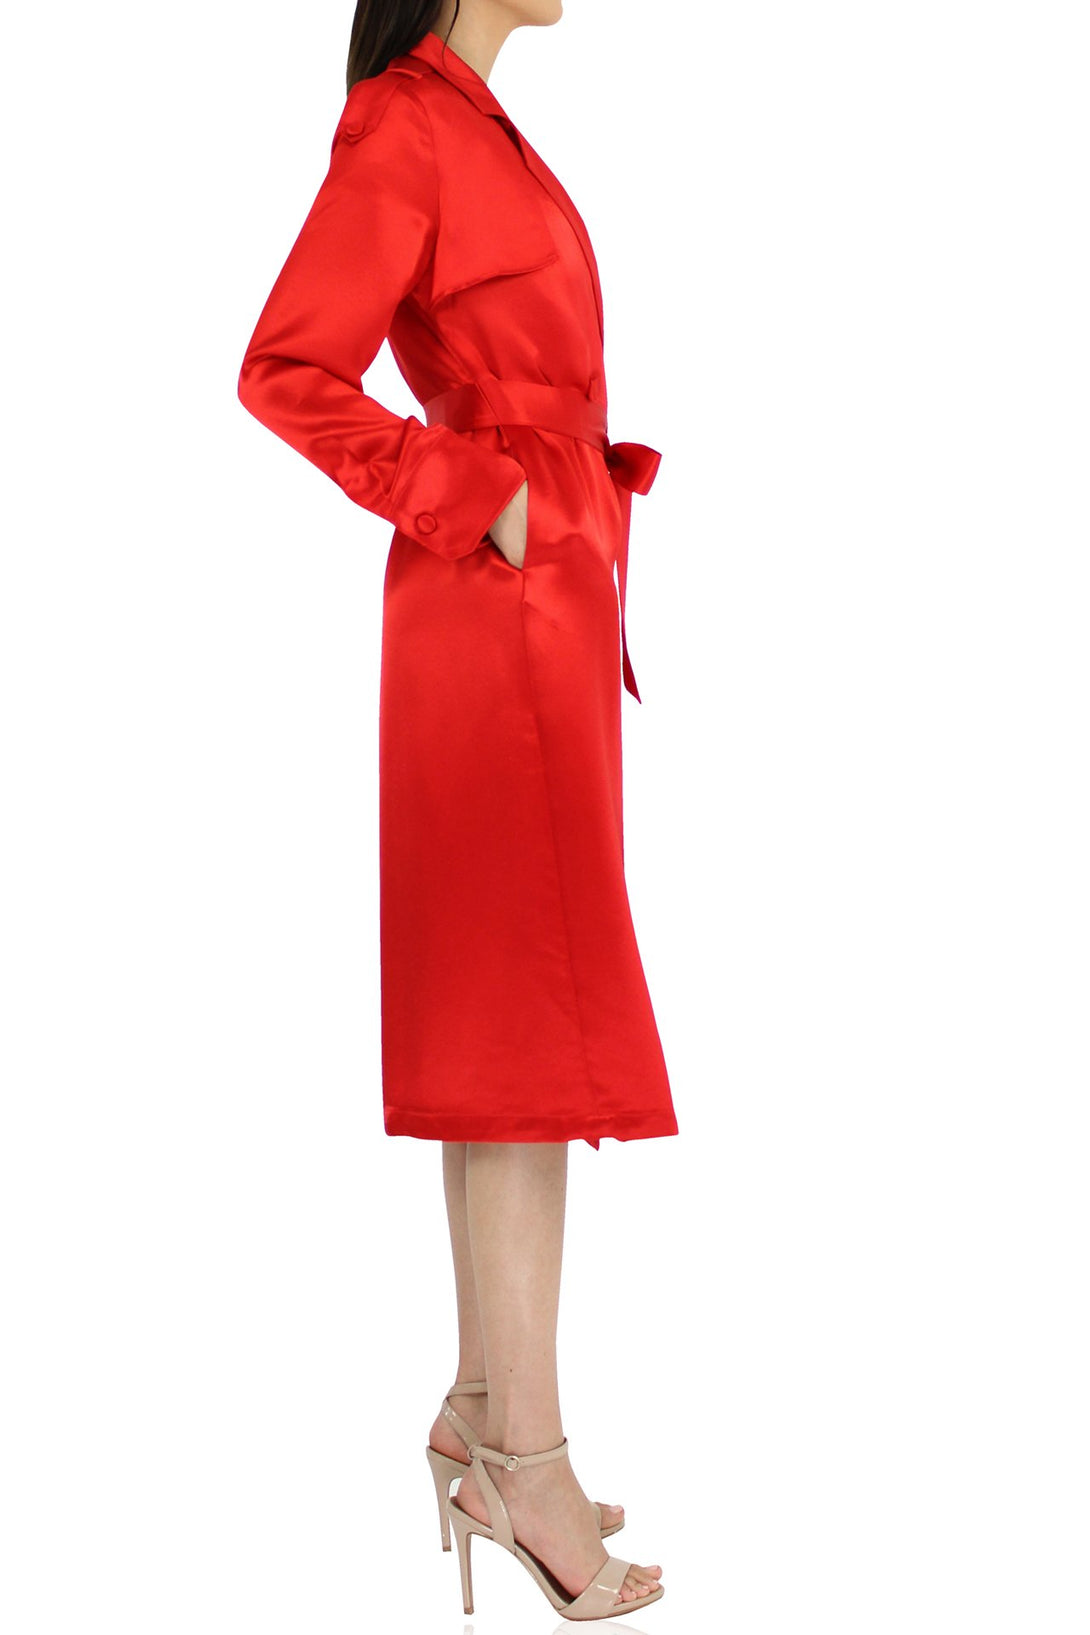 Designer-Red-Robe-Dress-By-Kyle-Richard